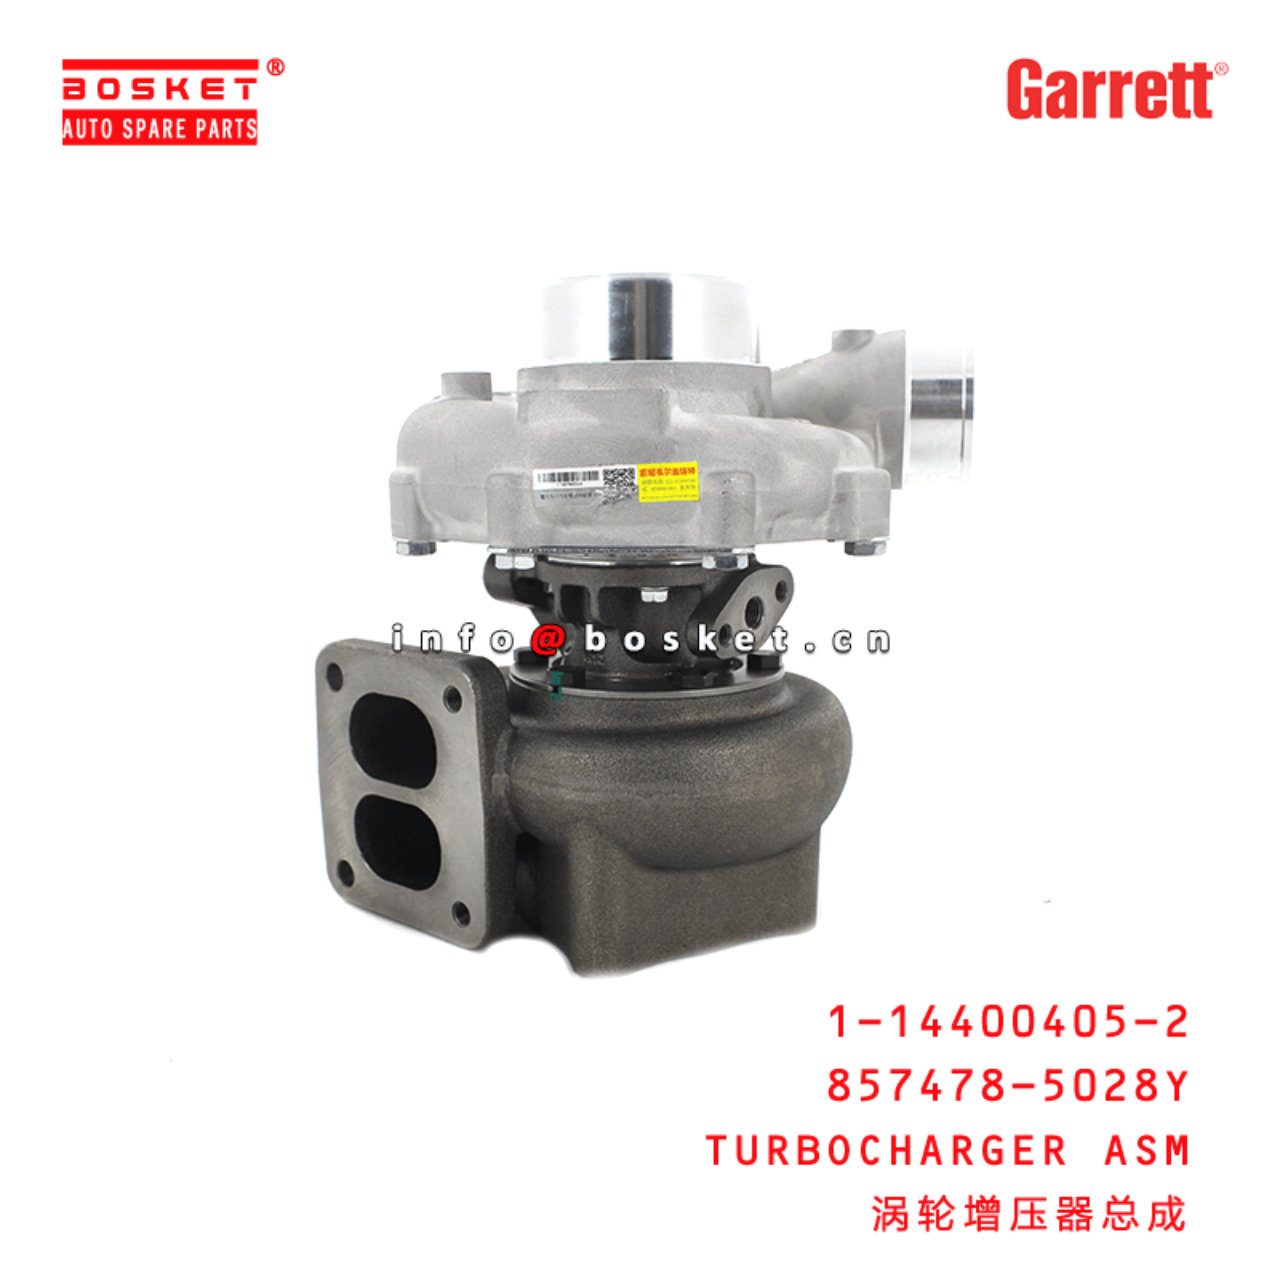 Garrett Genuine 857478-5028Y 1-14400405-2 Turbocharger Assembly Suitable for ISUZU XE 6HK1 